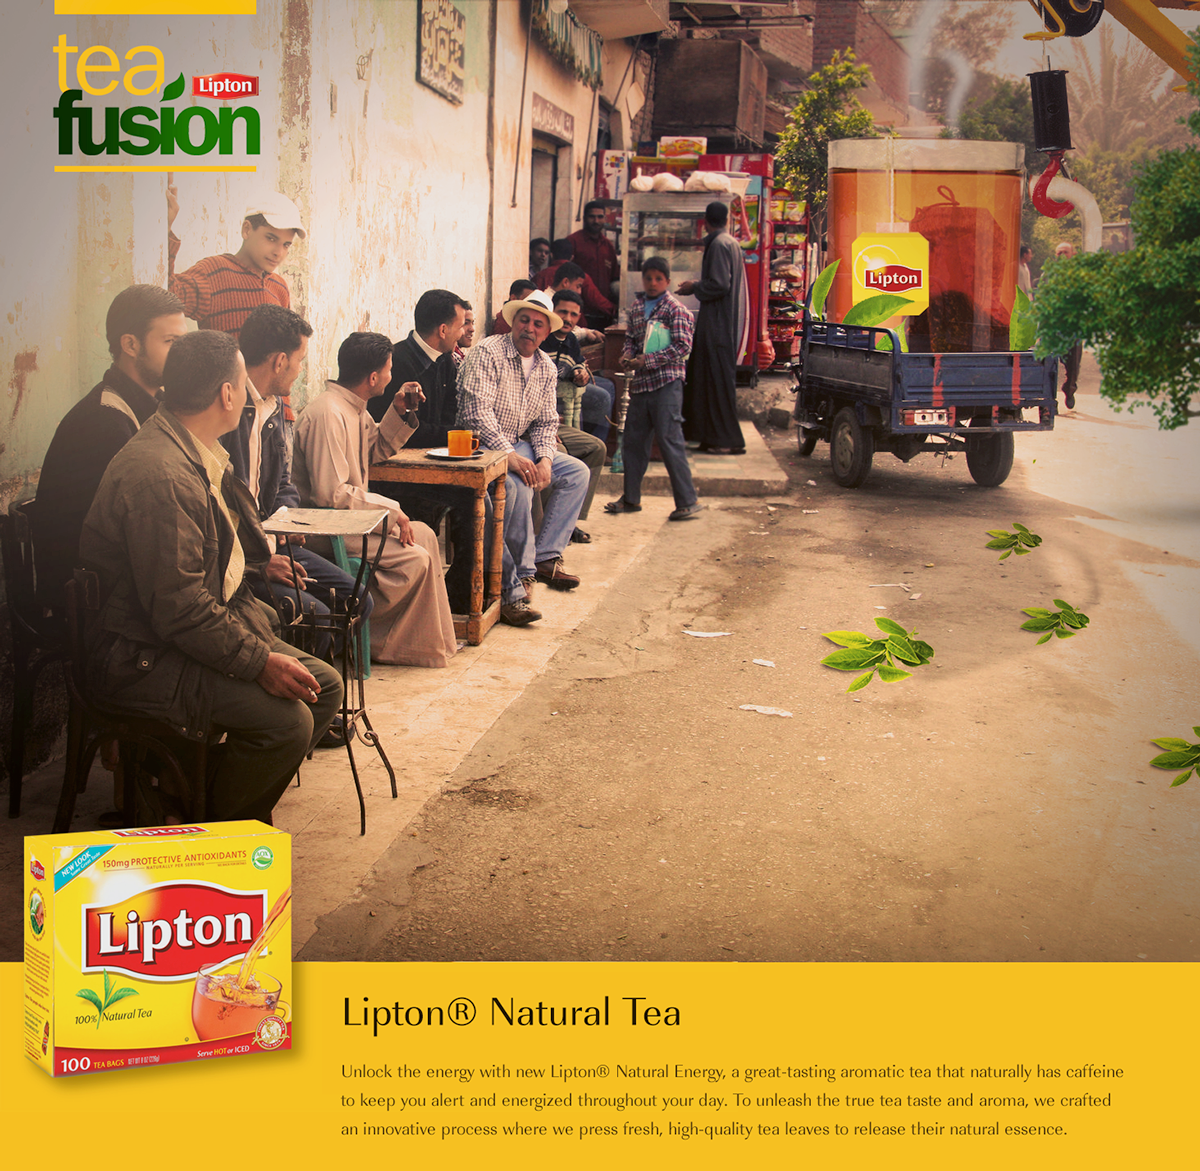 tea Lipton ads egypt cairo egypt street creative photoshop manipulation